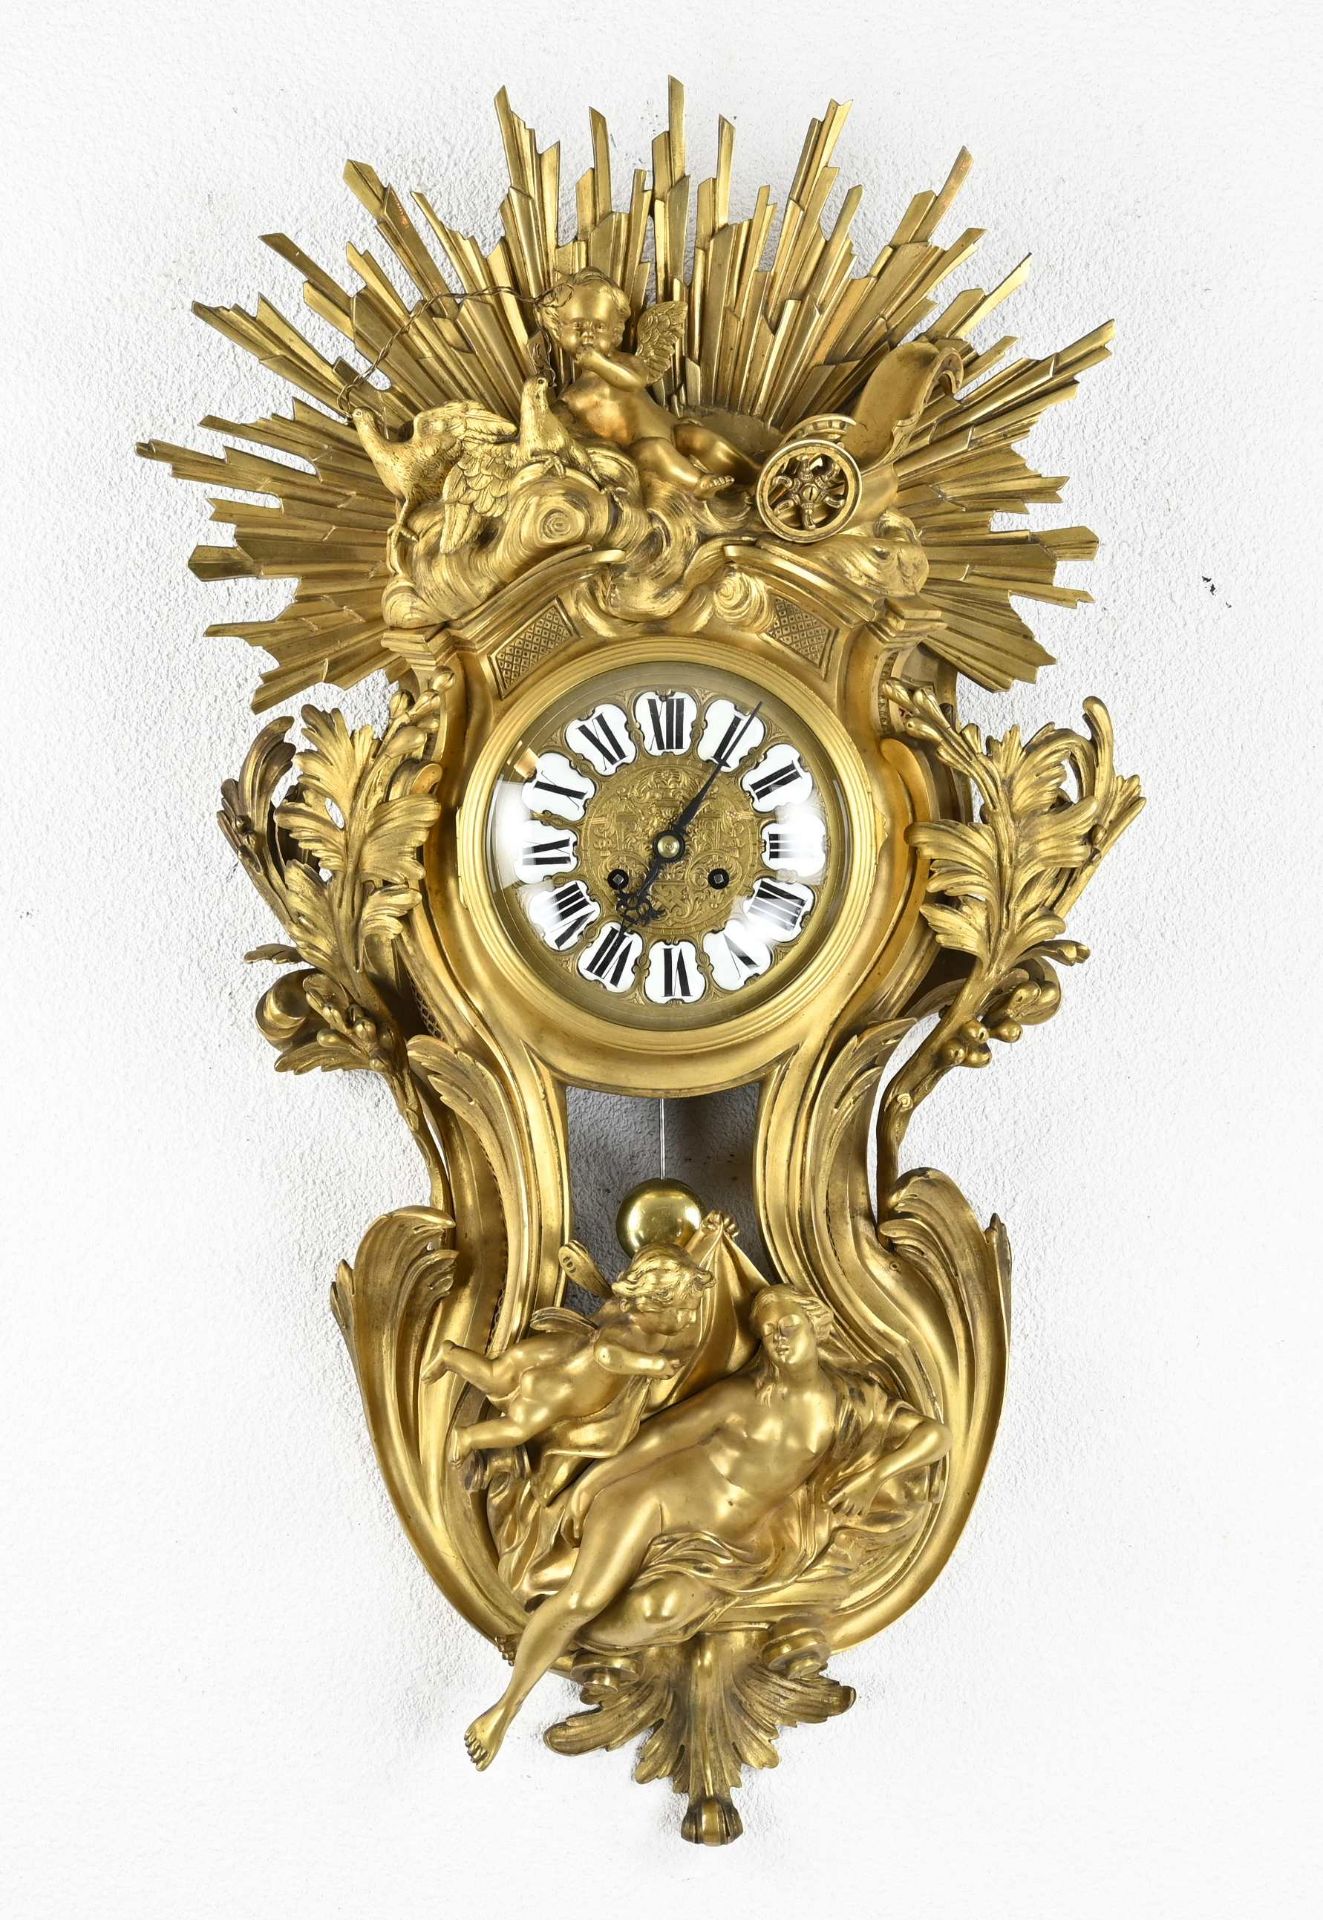 19th century French cartel clock, 1850